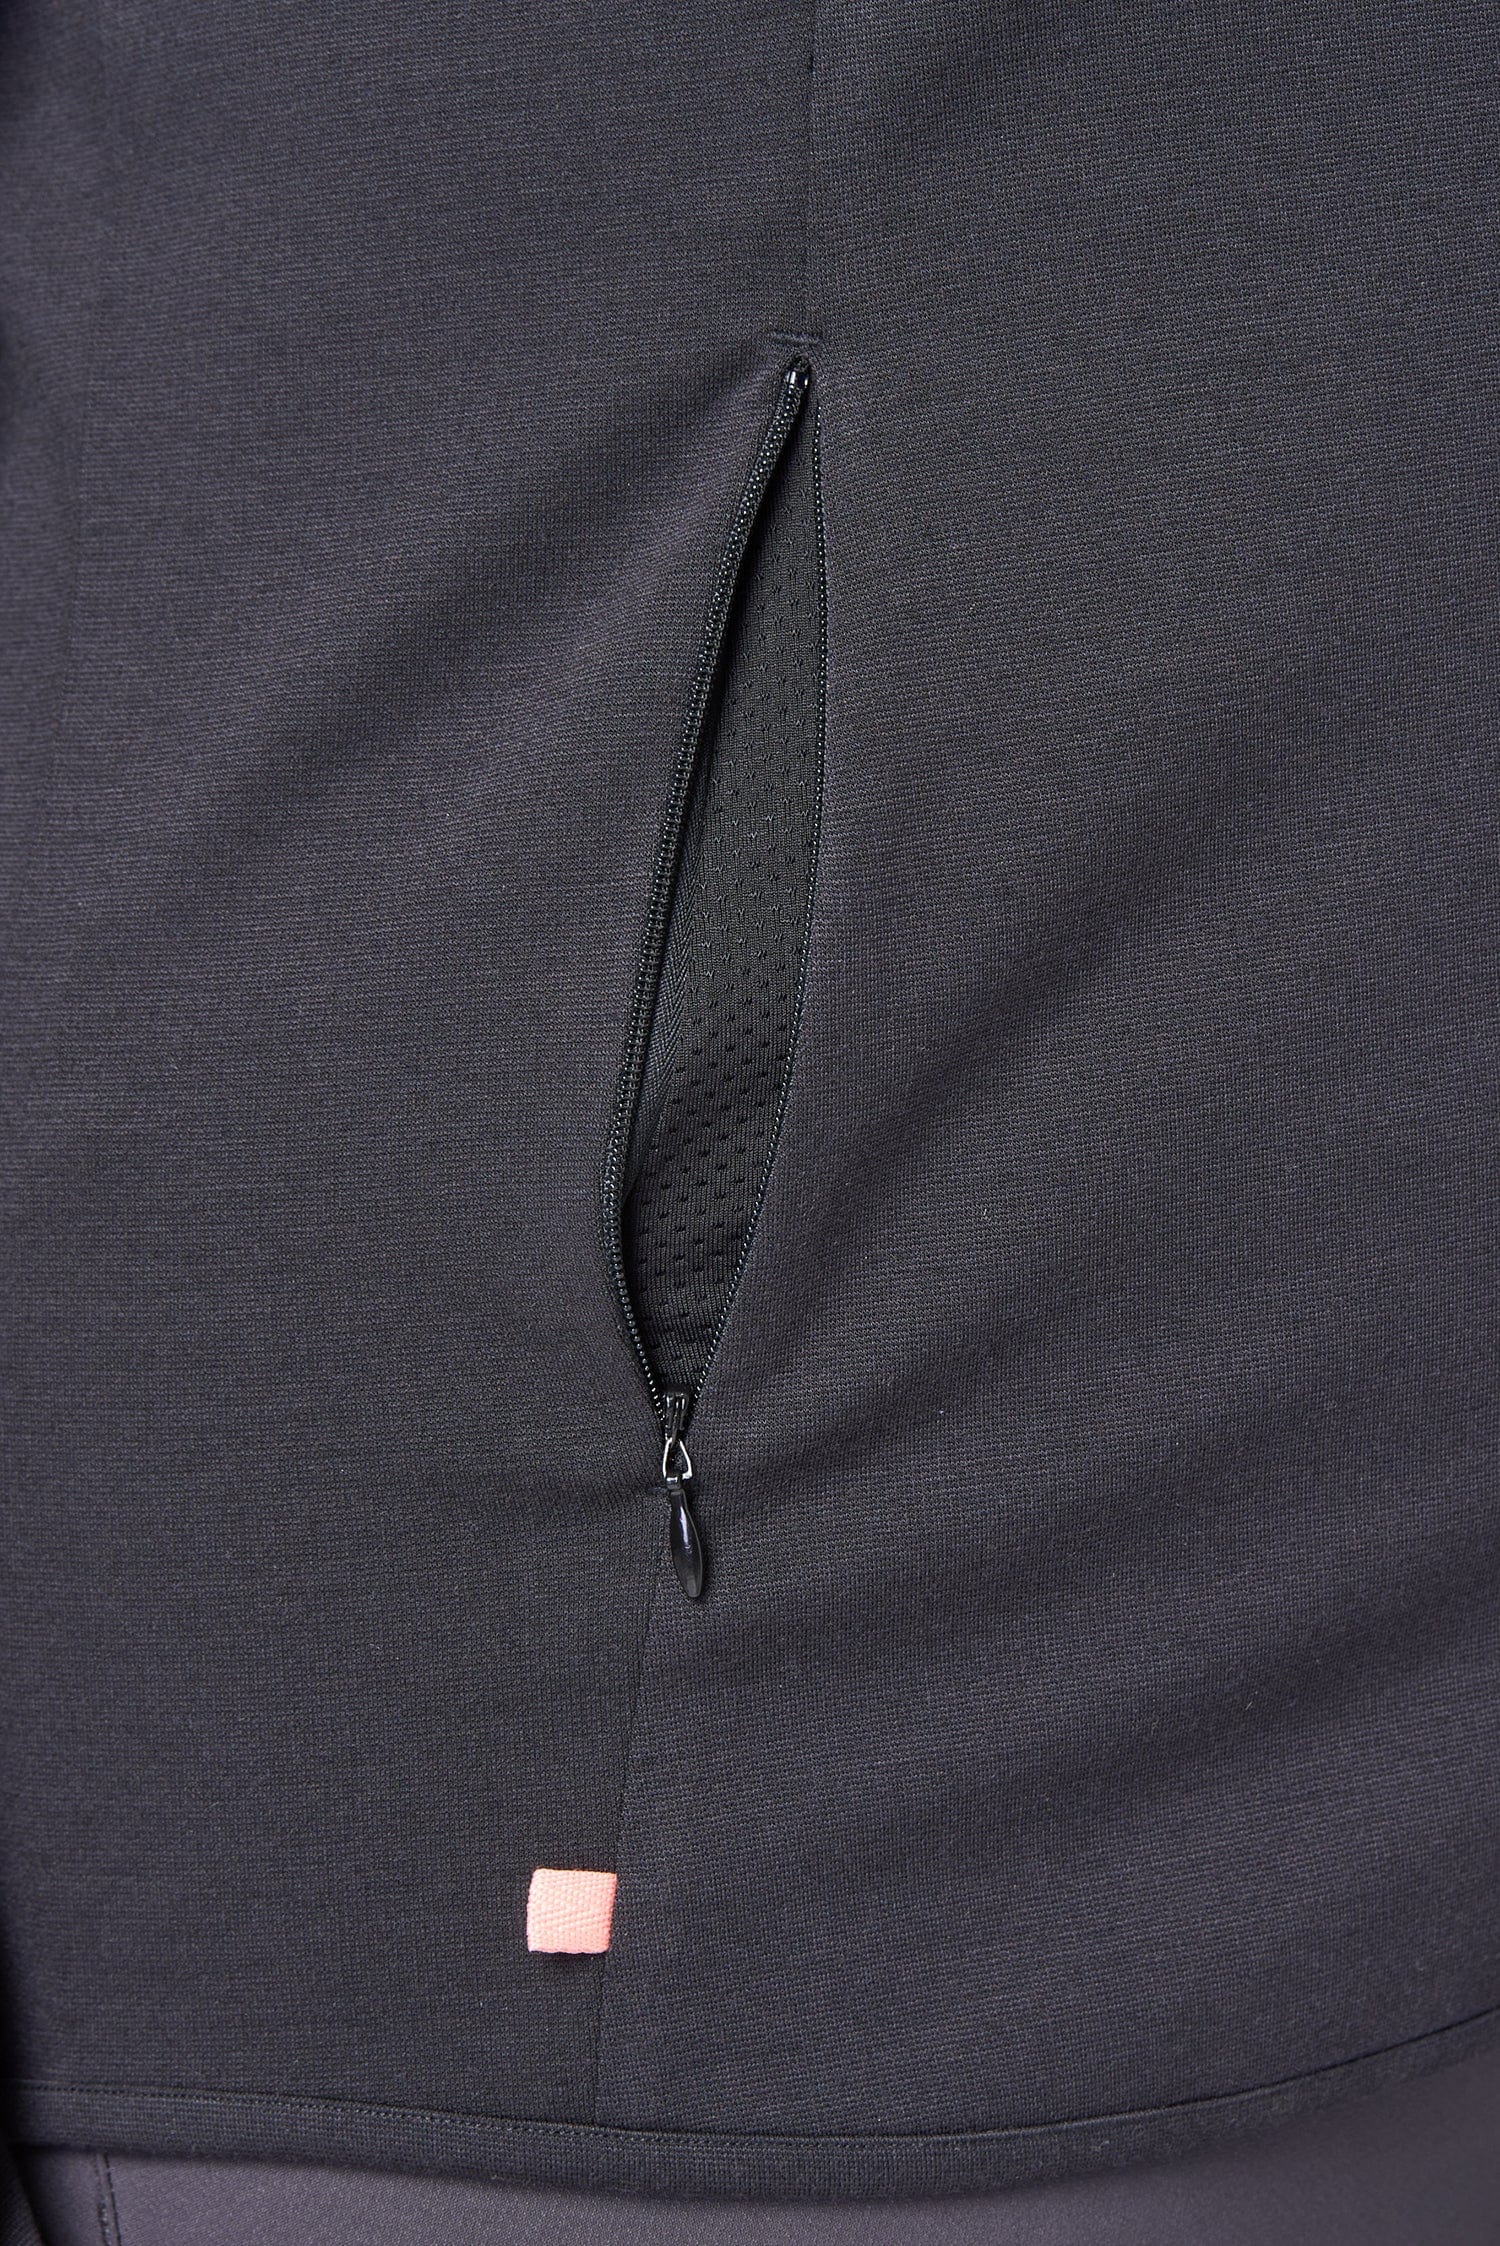 Performance Full Zip Mid Layer - Black Sweatshirt  